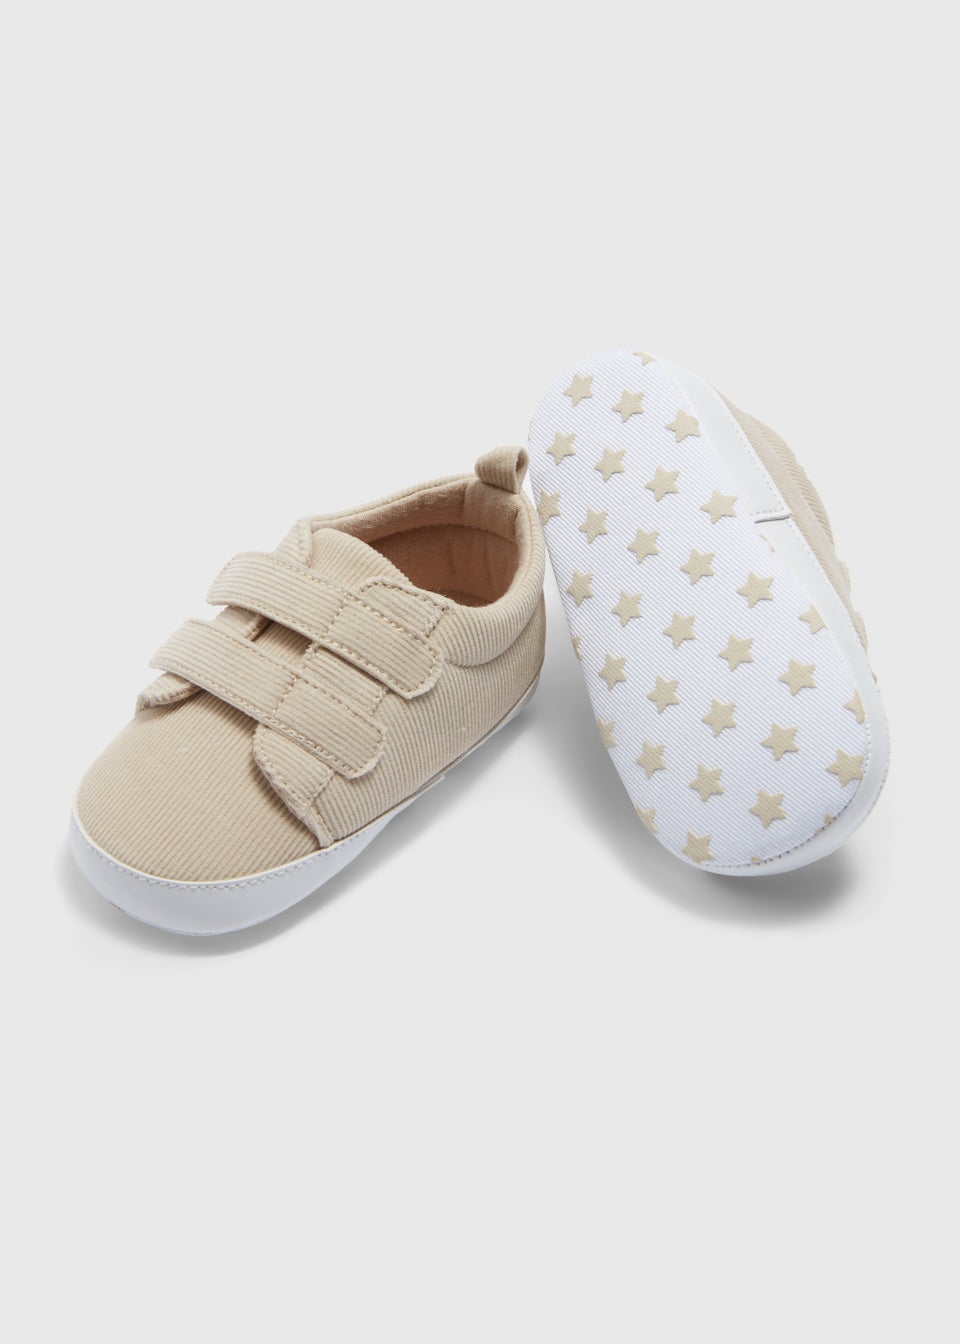 Oatmeal Riptape Slip On Soft Sole Baby Shoes (Newborn-18mths)